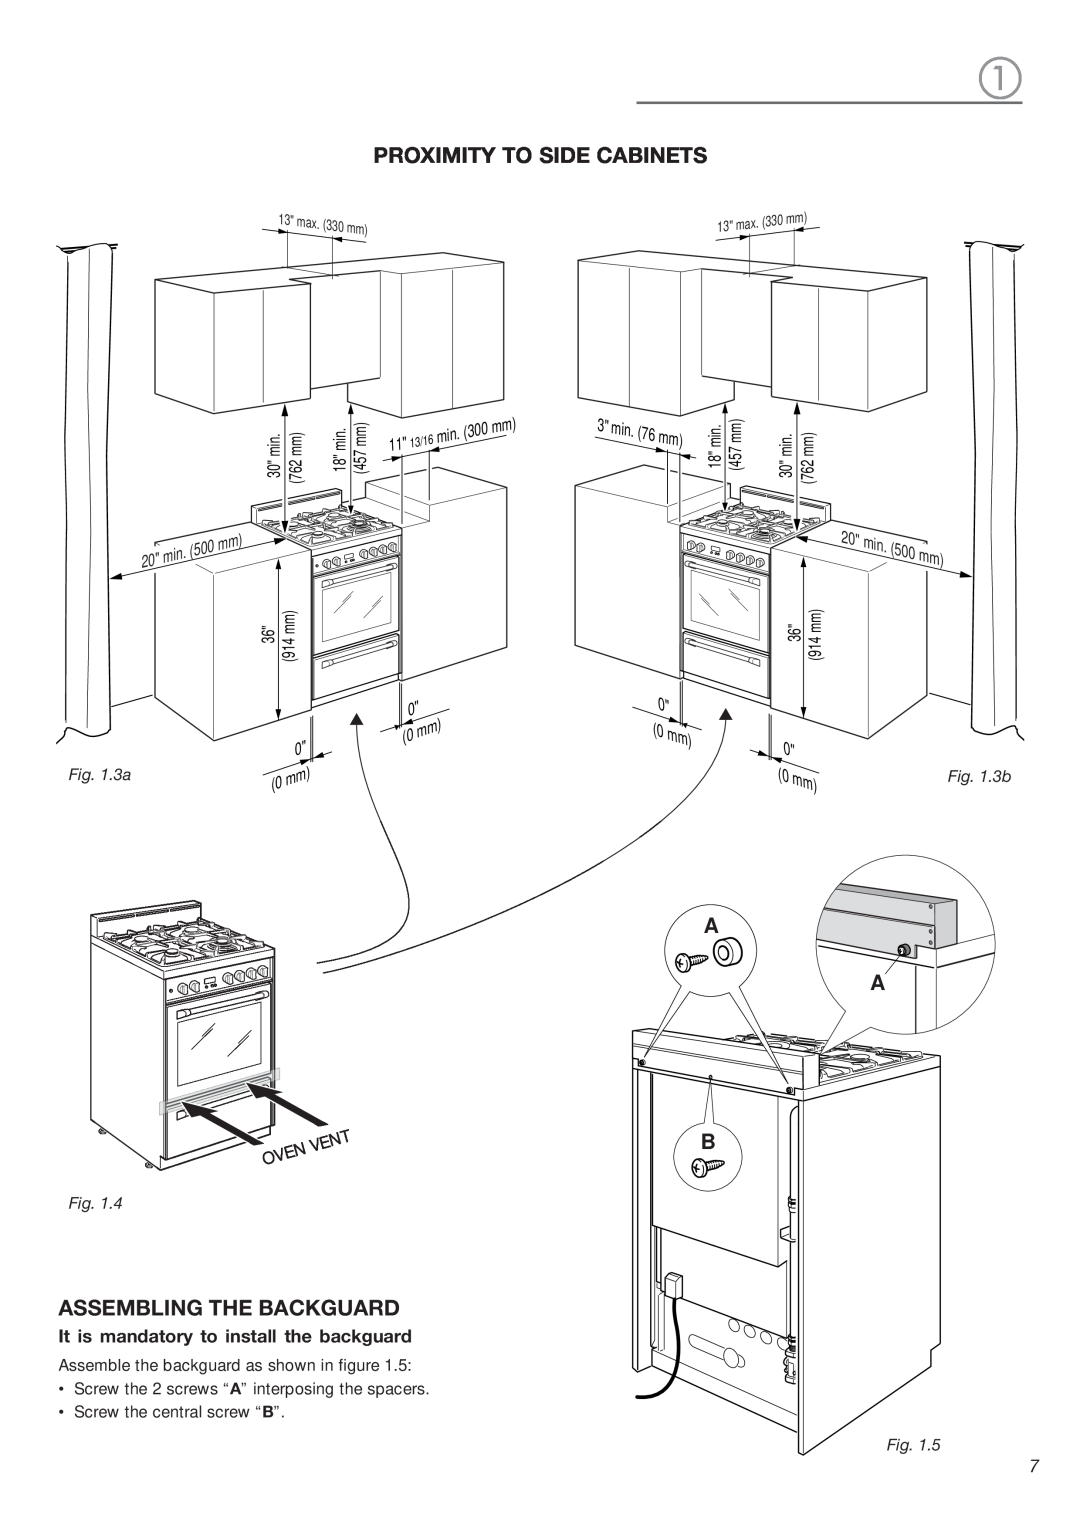 DeLonghi DEFSGG 24 SS Proximity To Side Cabinets, Assembling The Backguard, 0 0 mm, 3a, 3b, 13/16, 30 min. 762 mm, 3 min 